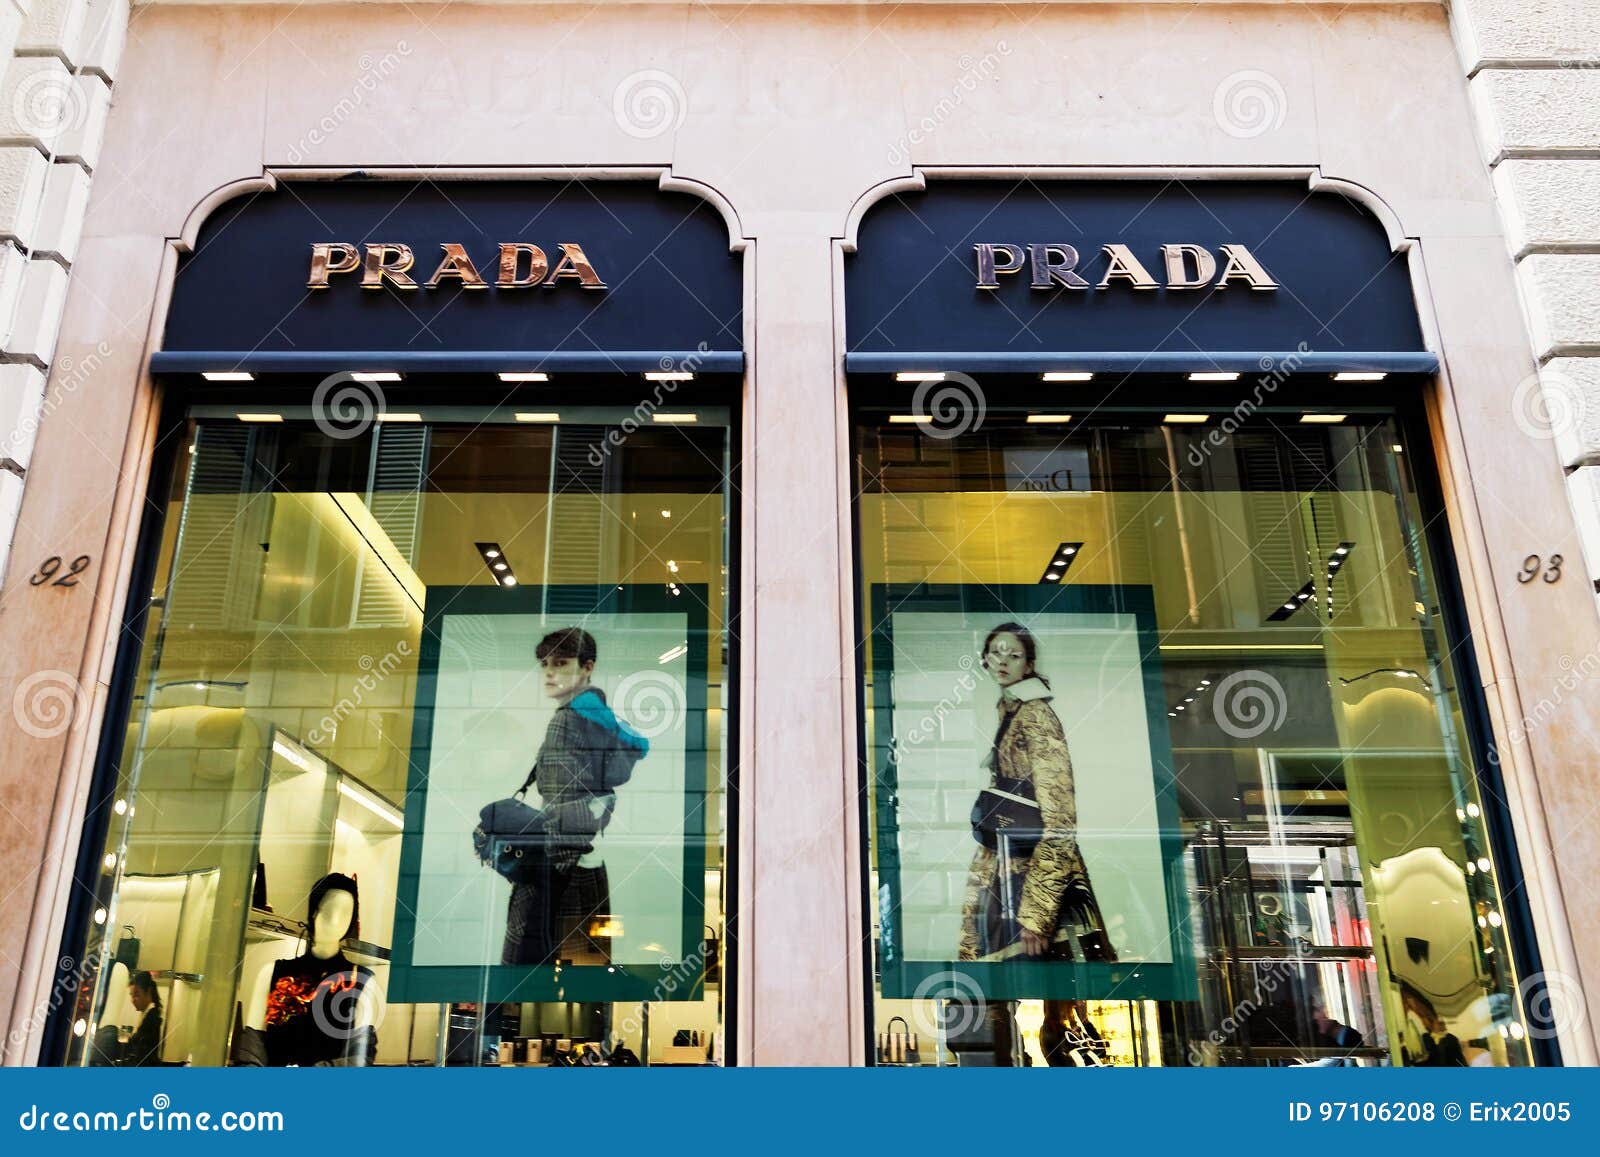 Prada Name on Street Shop Window Rome Editorial Stock Photo - Image of